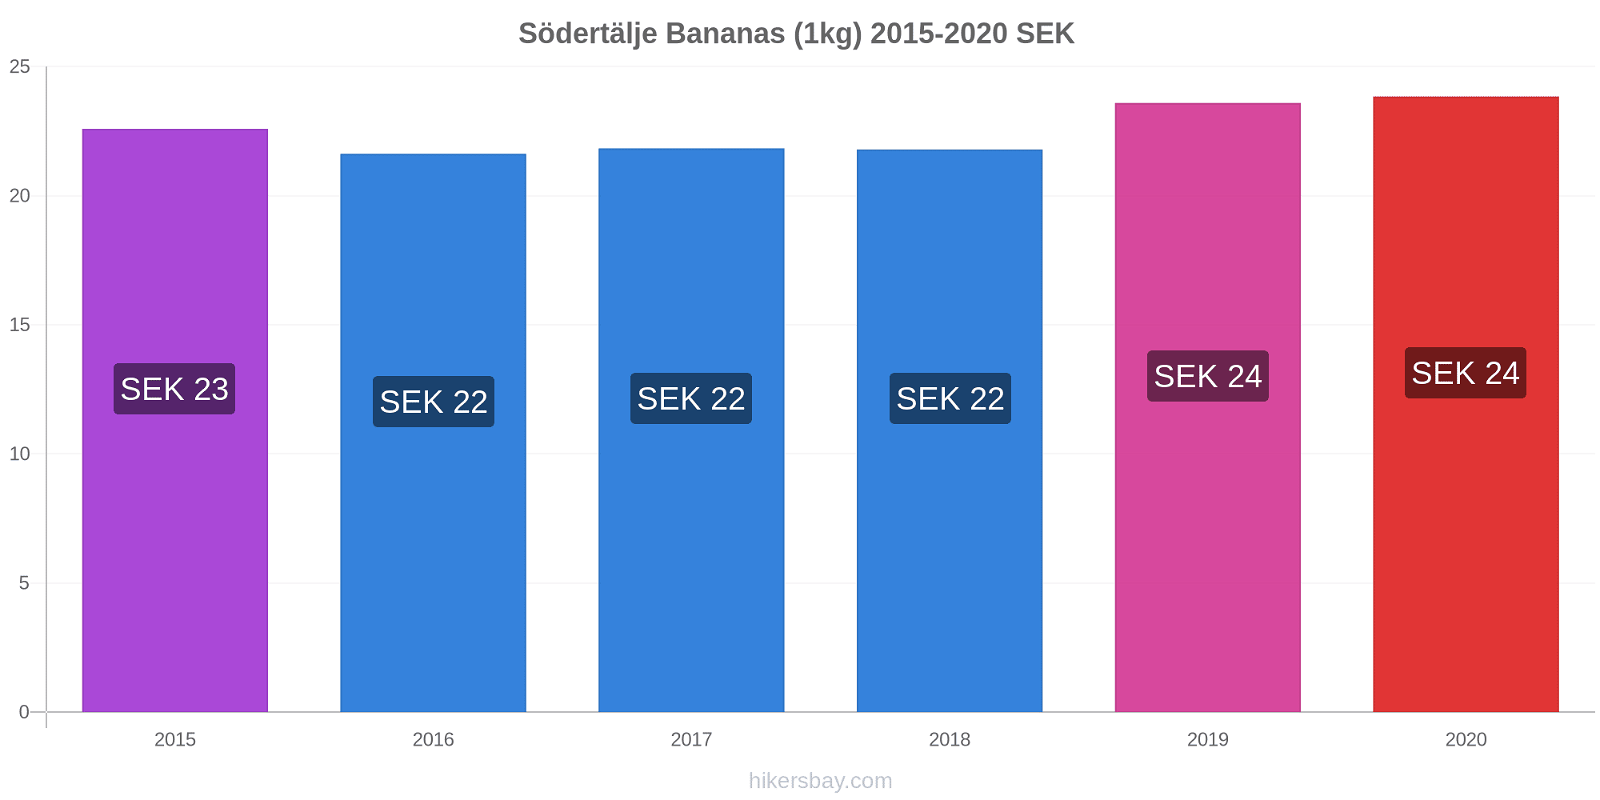 Södertälje price changes Bananas (1kg) hikersbay.com